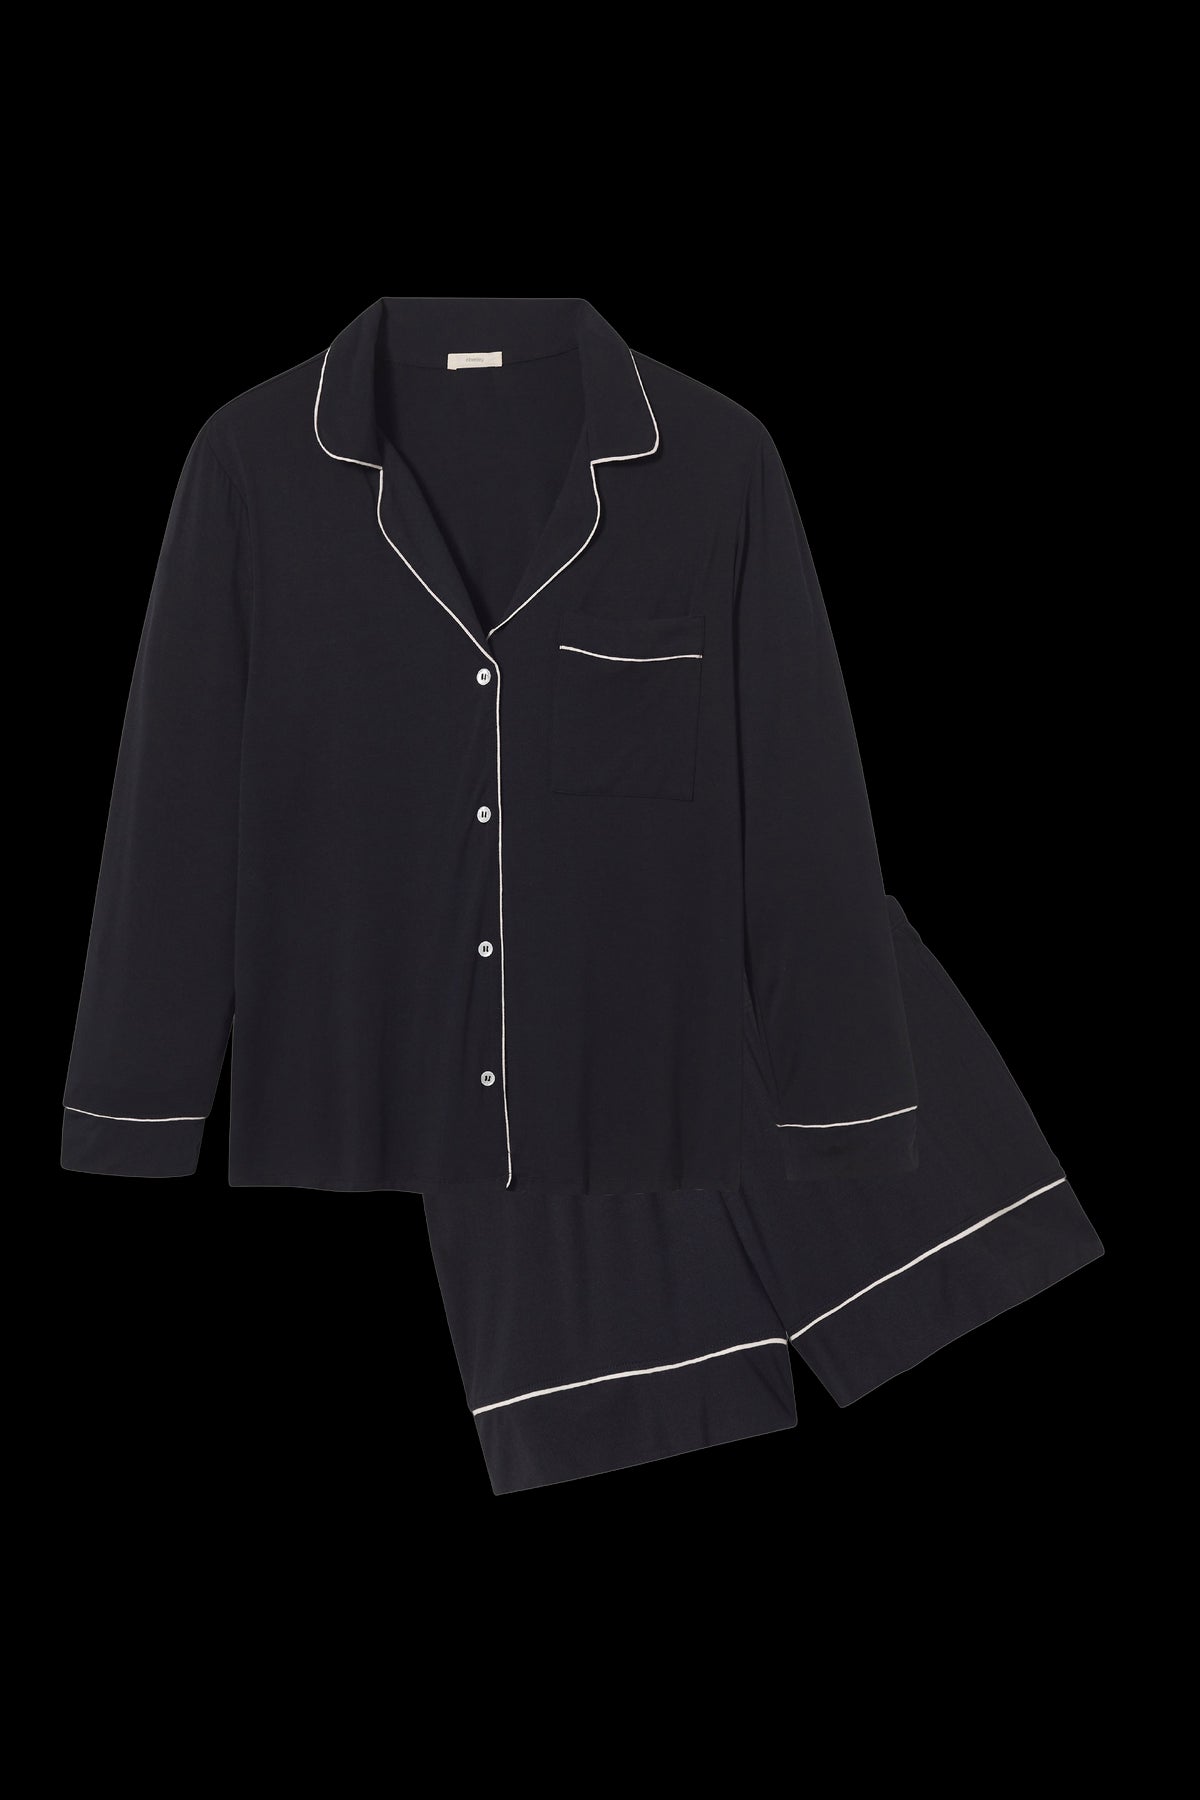 Gisele Long Sleeve Short PJ Set in Black/Sorbet